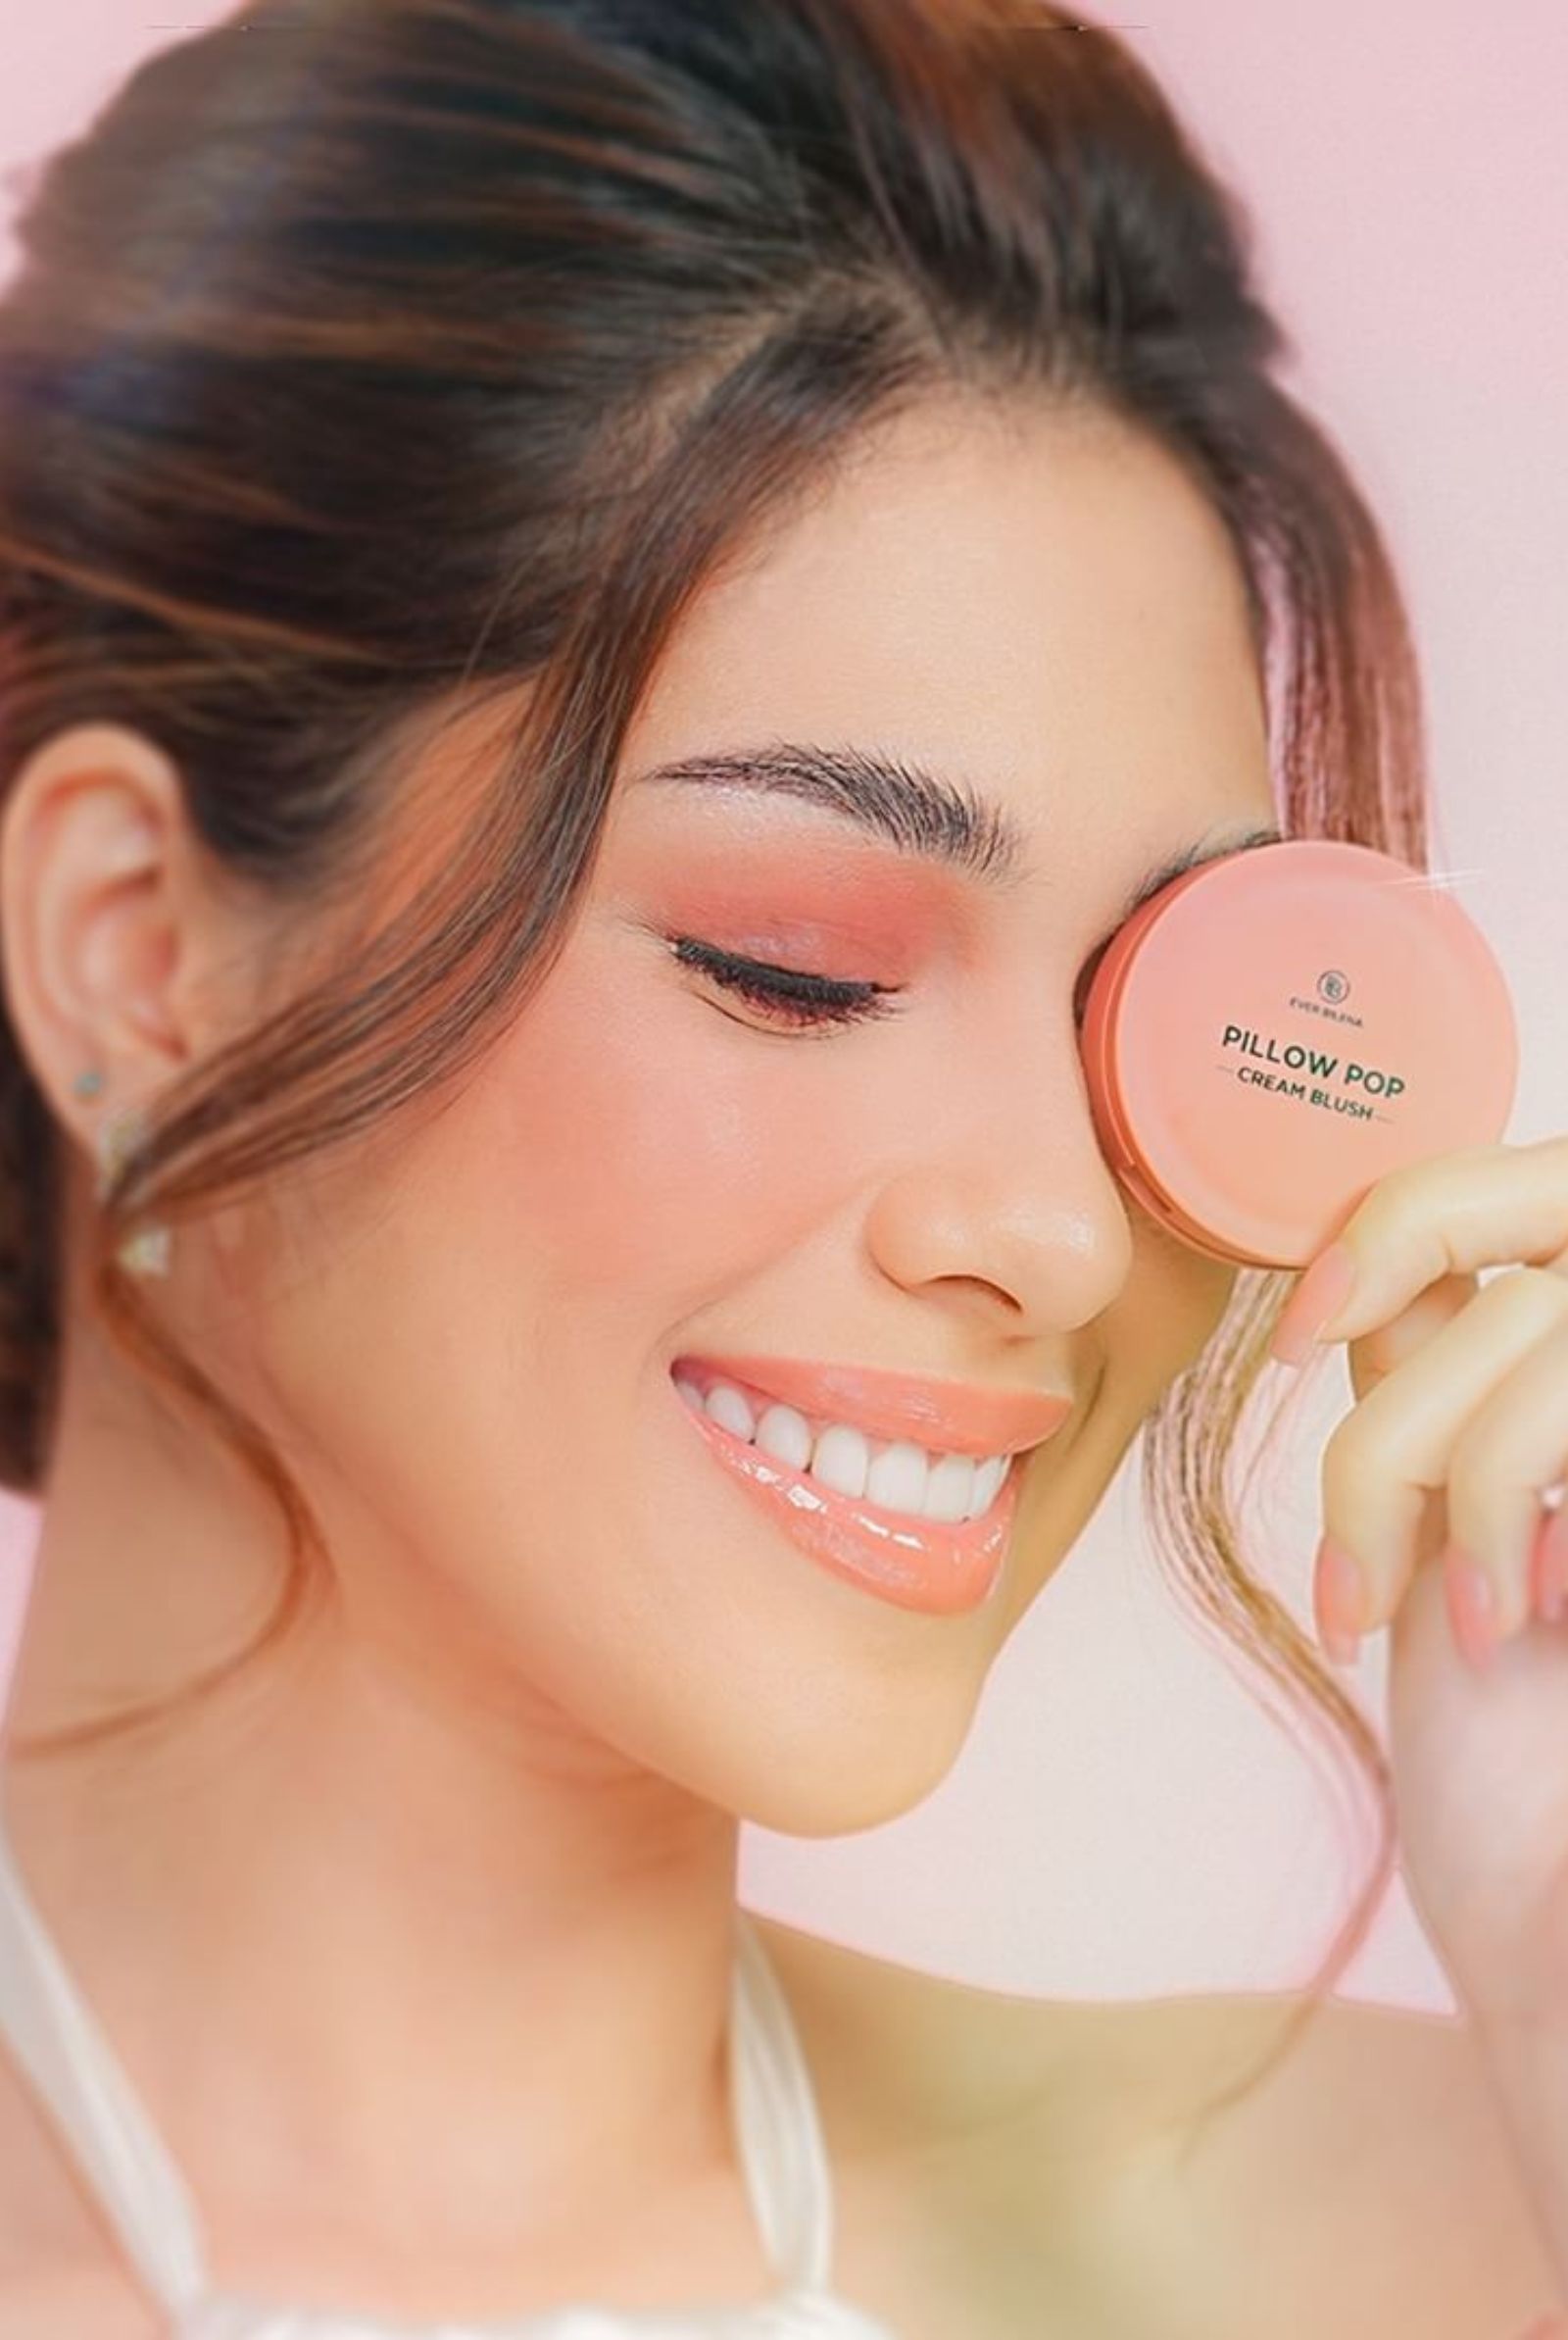 Filipino beauty brand - Ever Bilena Pillow Pop Cream Blush 